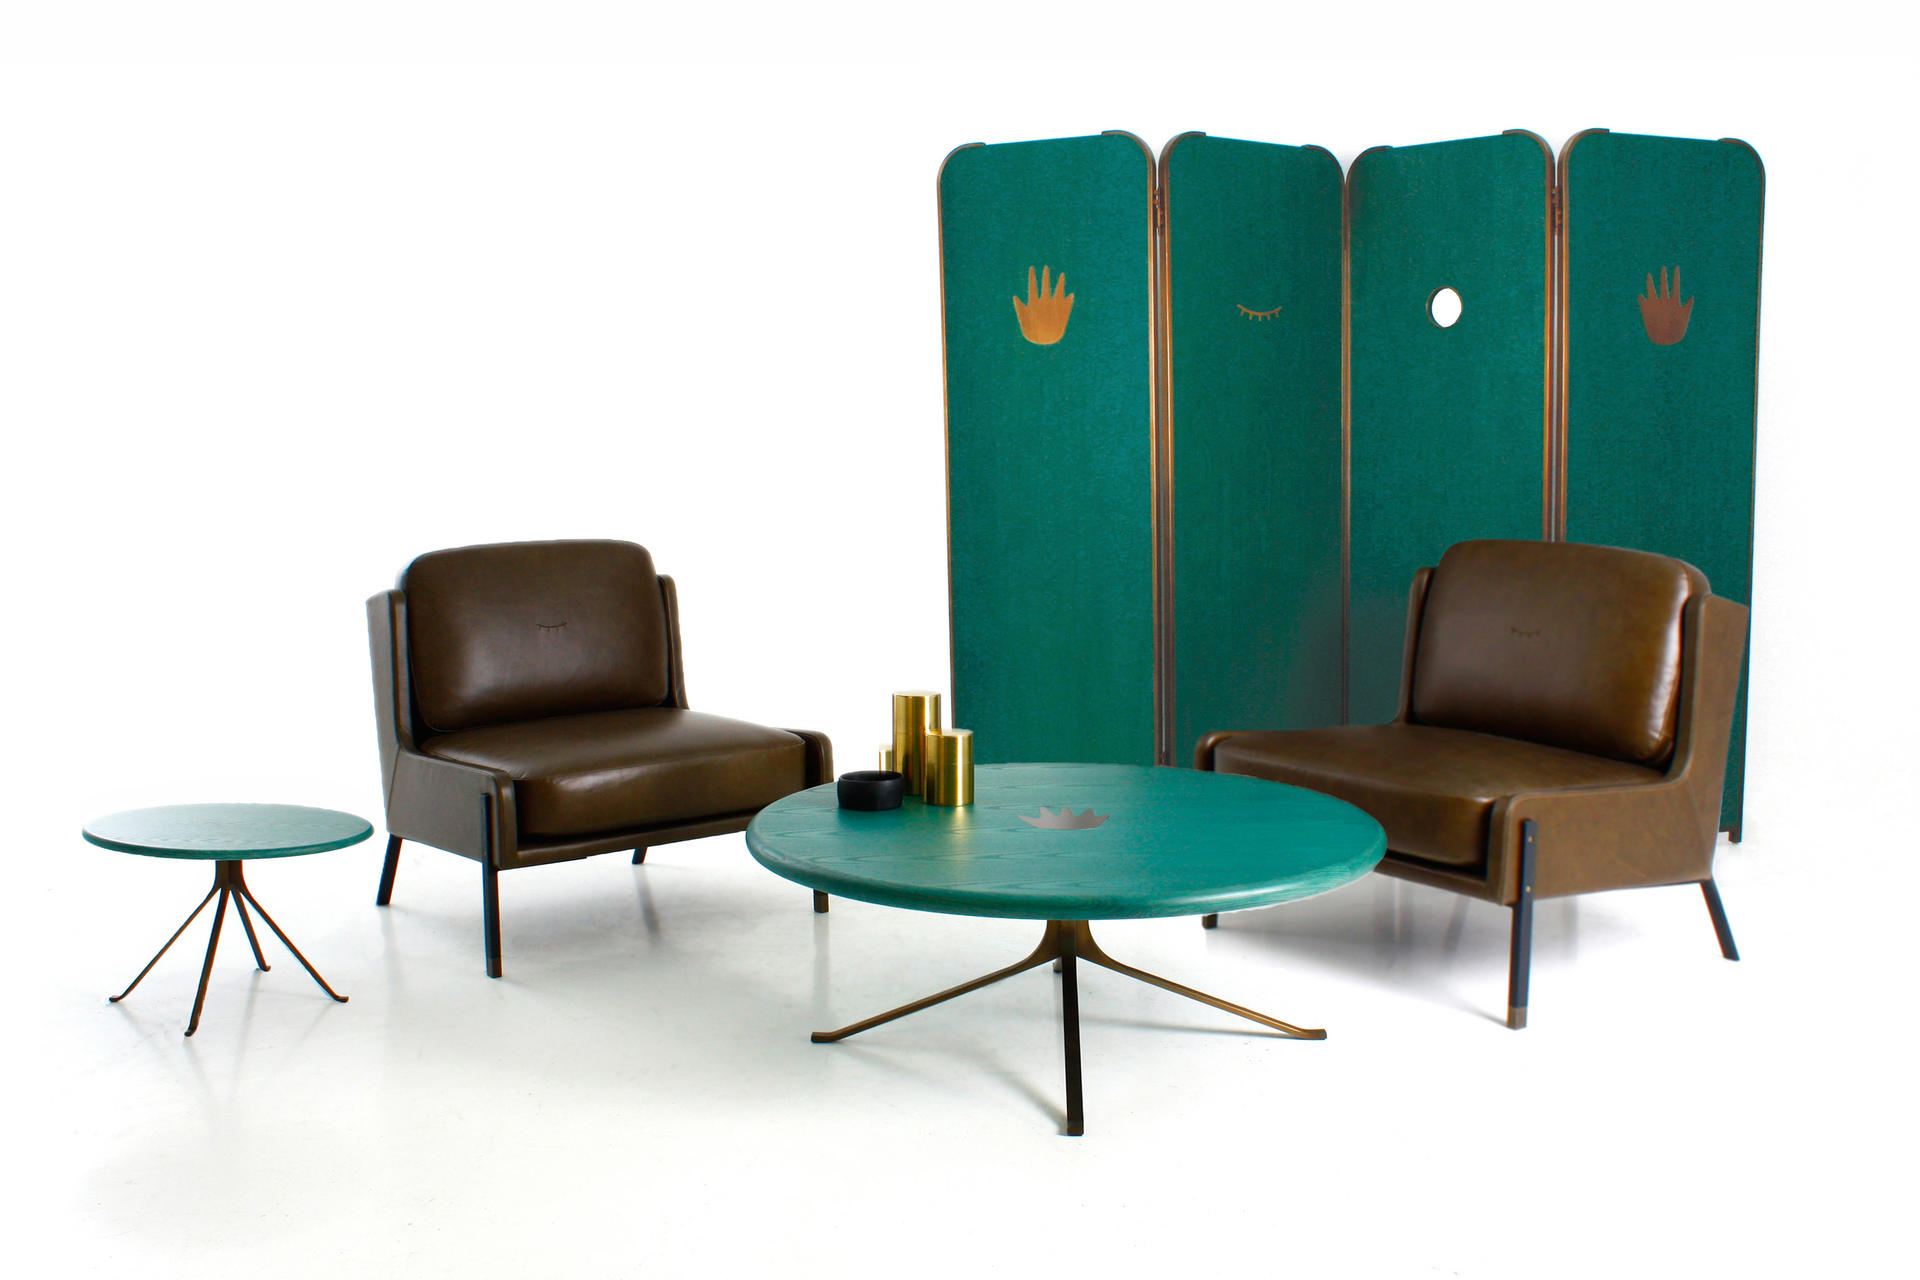 Chairs by Yabu Pushelberg for Shanghai-based Stellar Works.